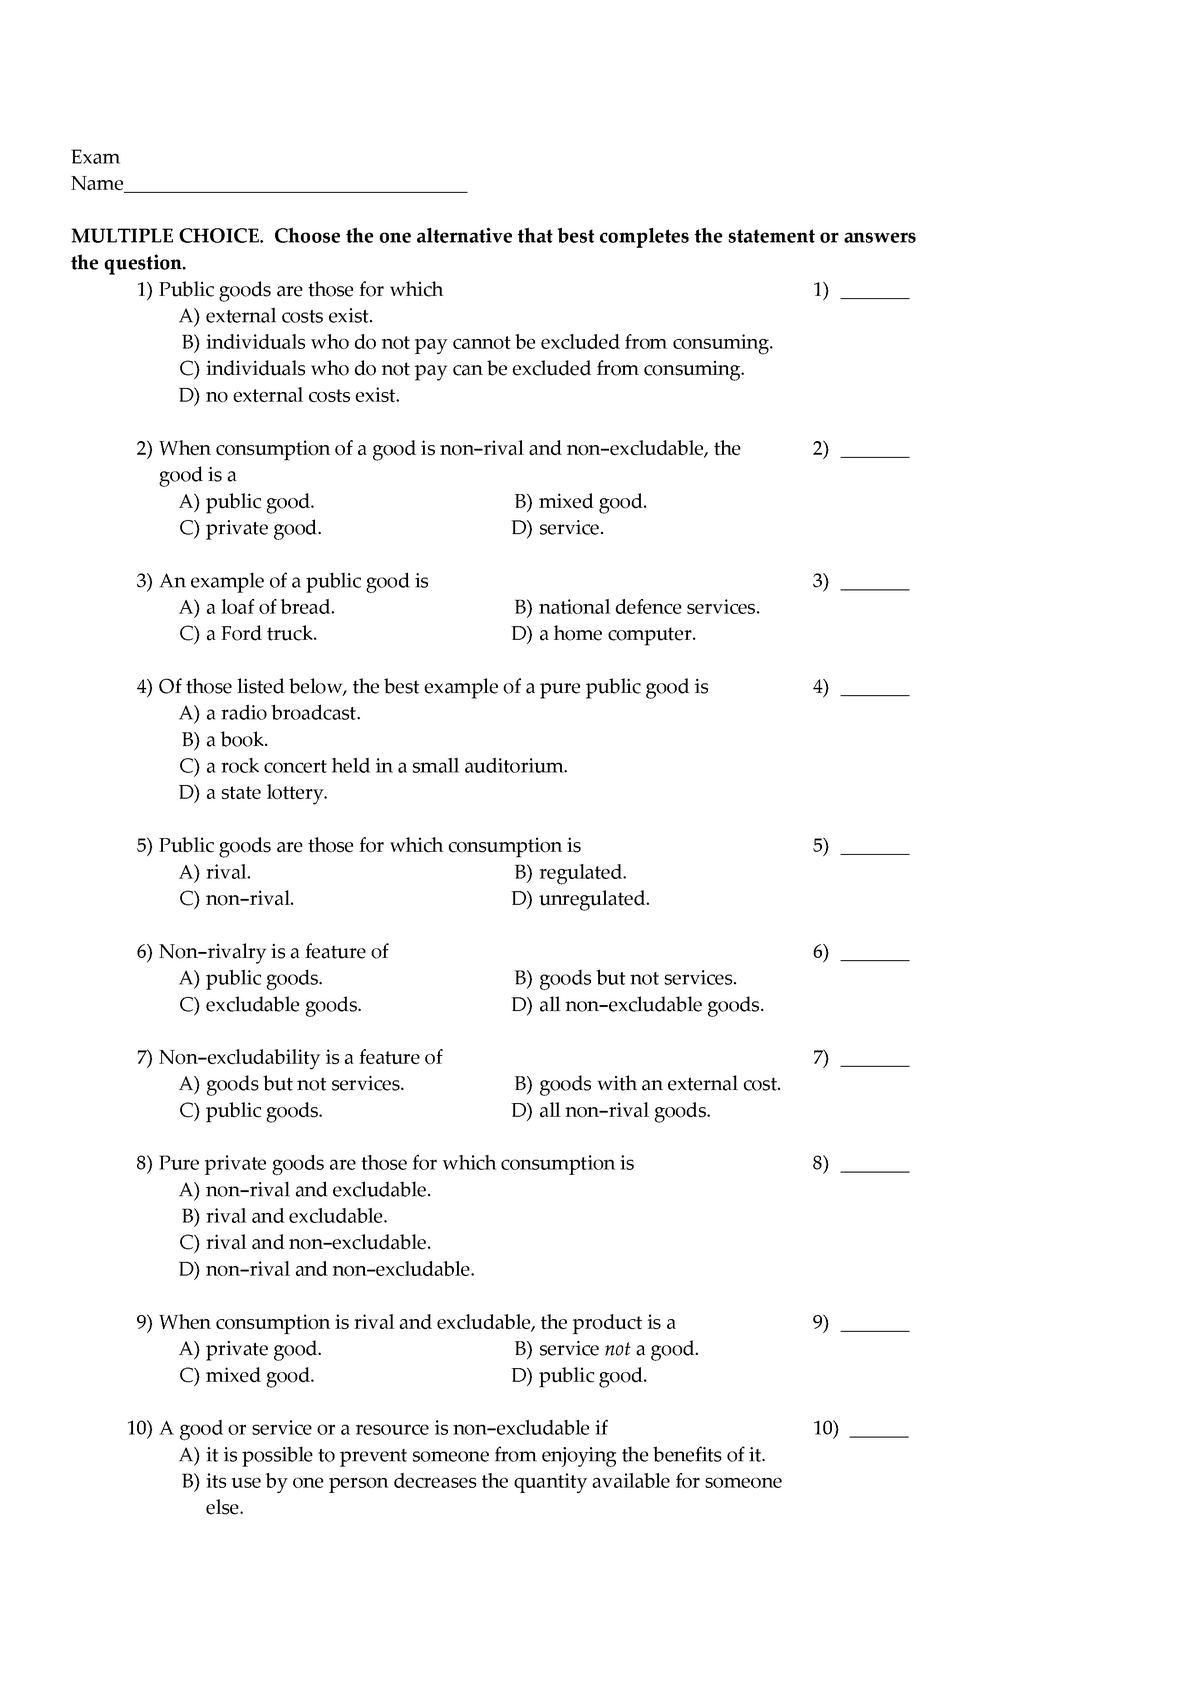 Multiple Choice Questions Chapter 16 Public Goods Exam Name Studocu